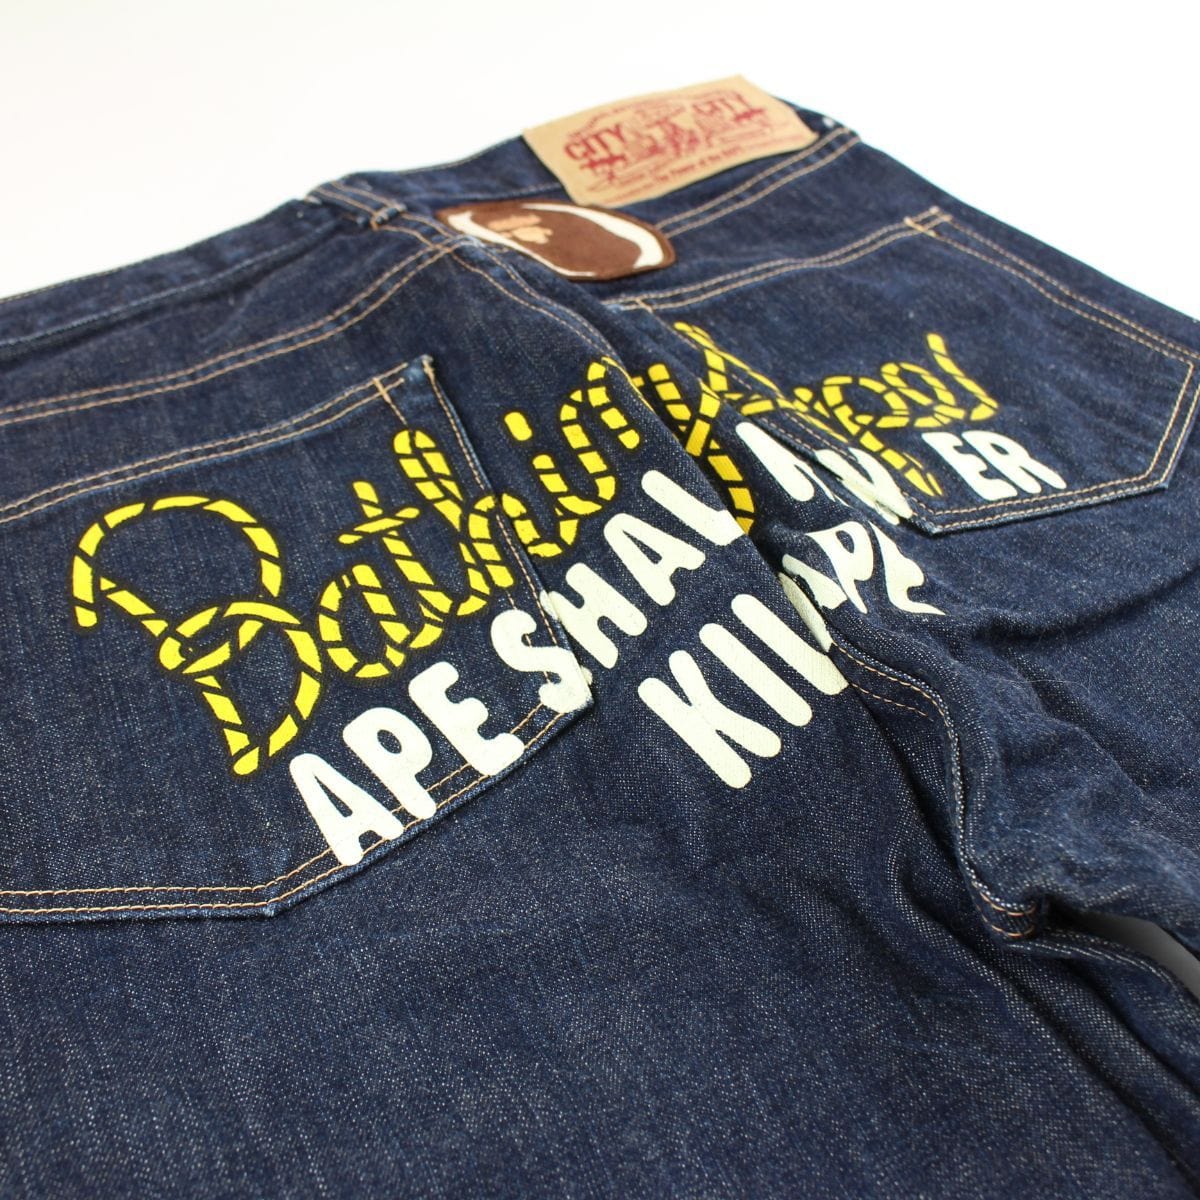 Bape yellow rope asnka text denim jeans - SaruGeneral